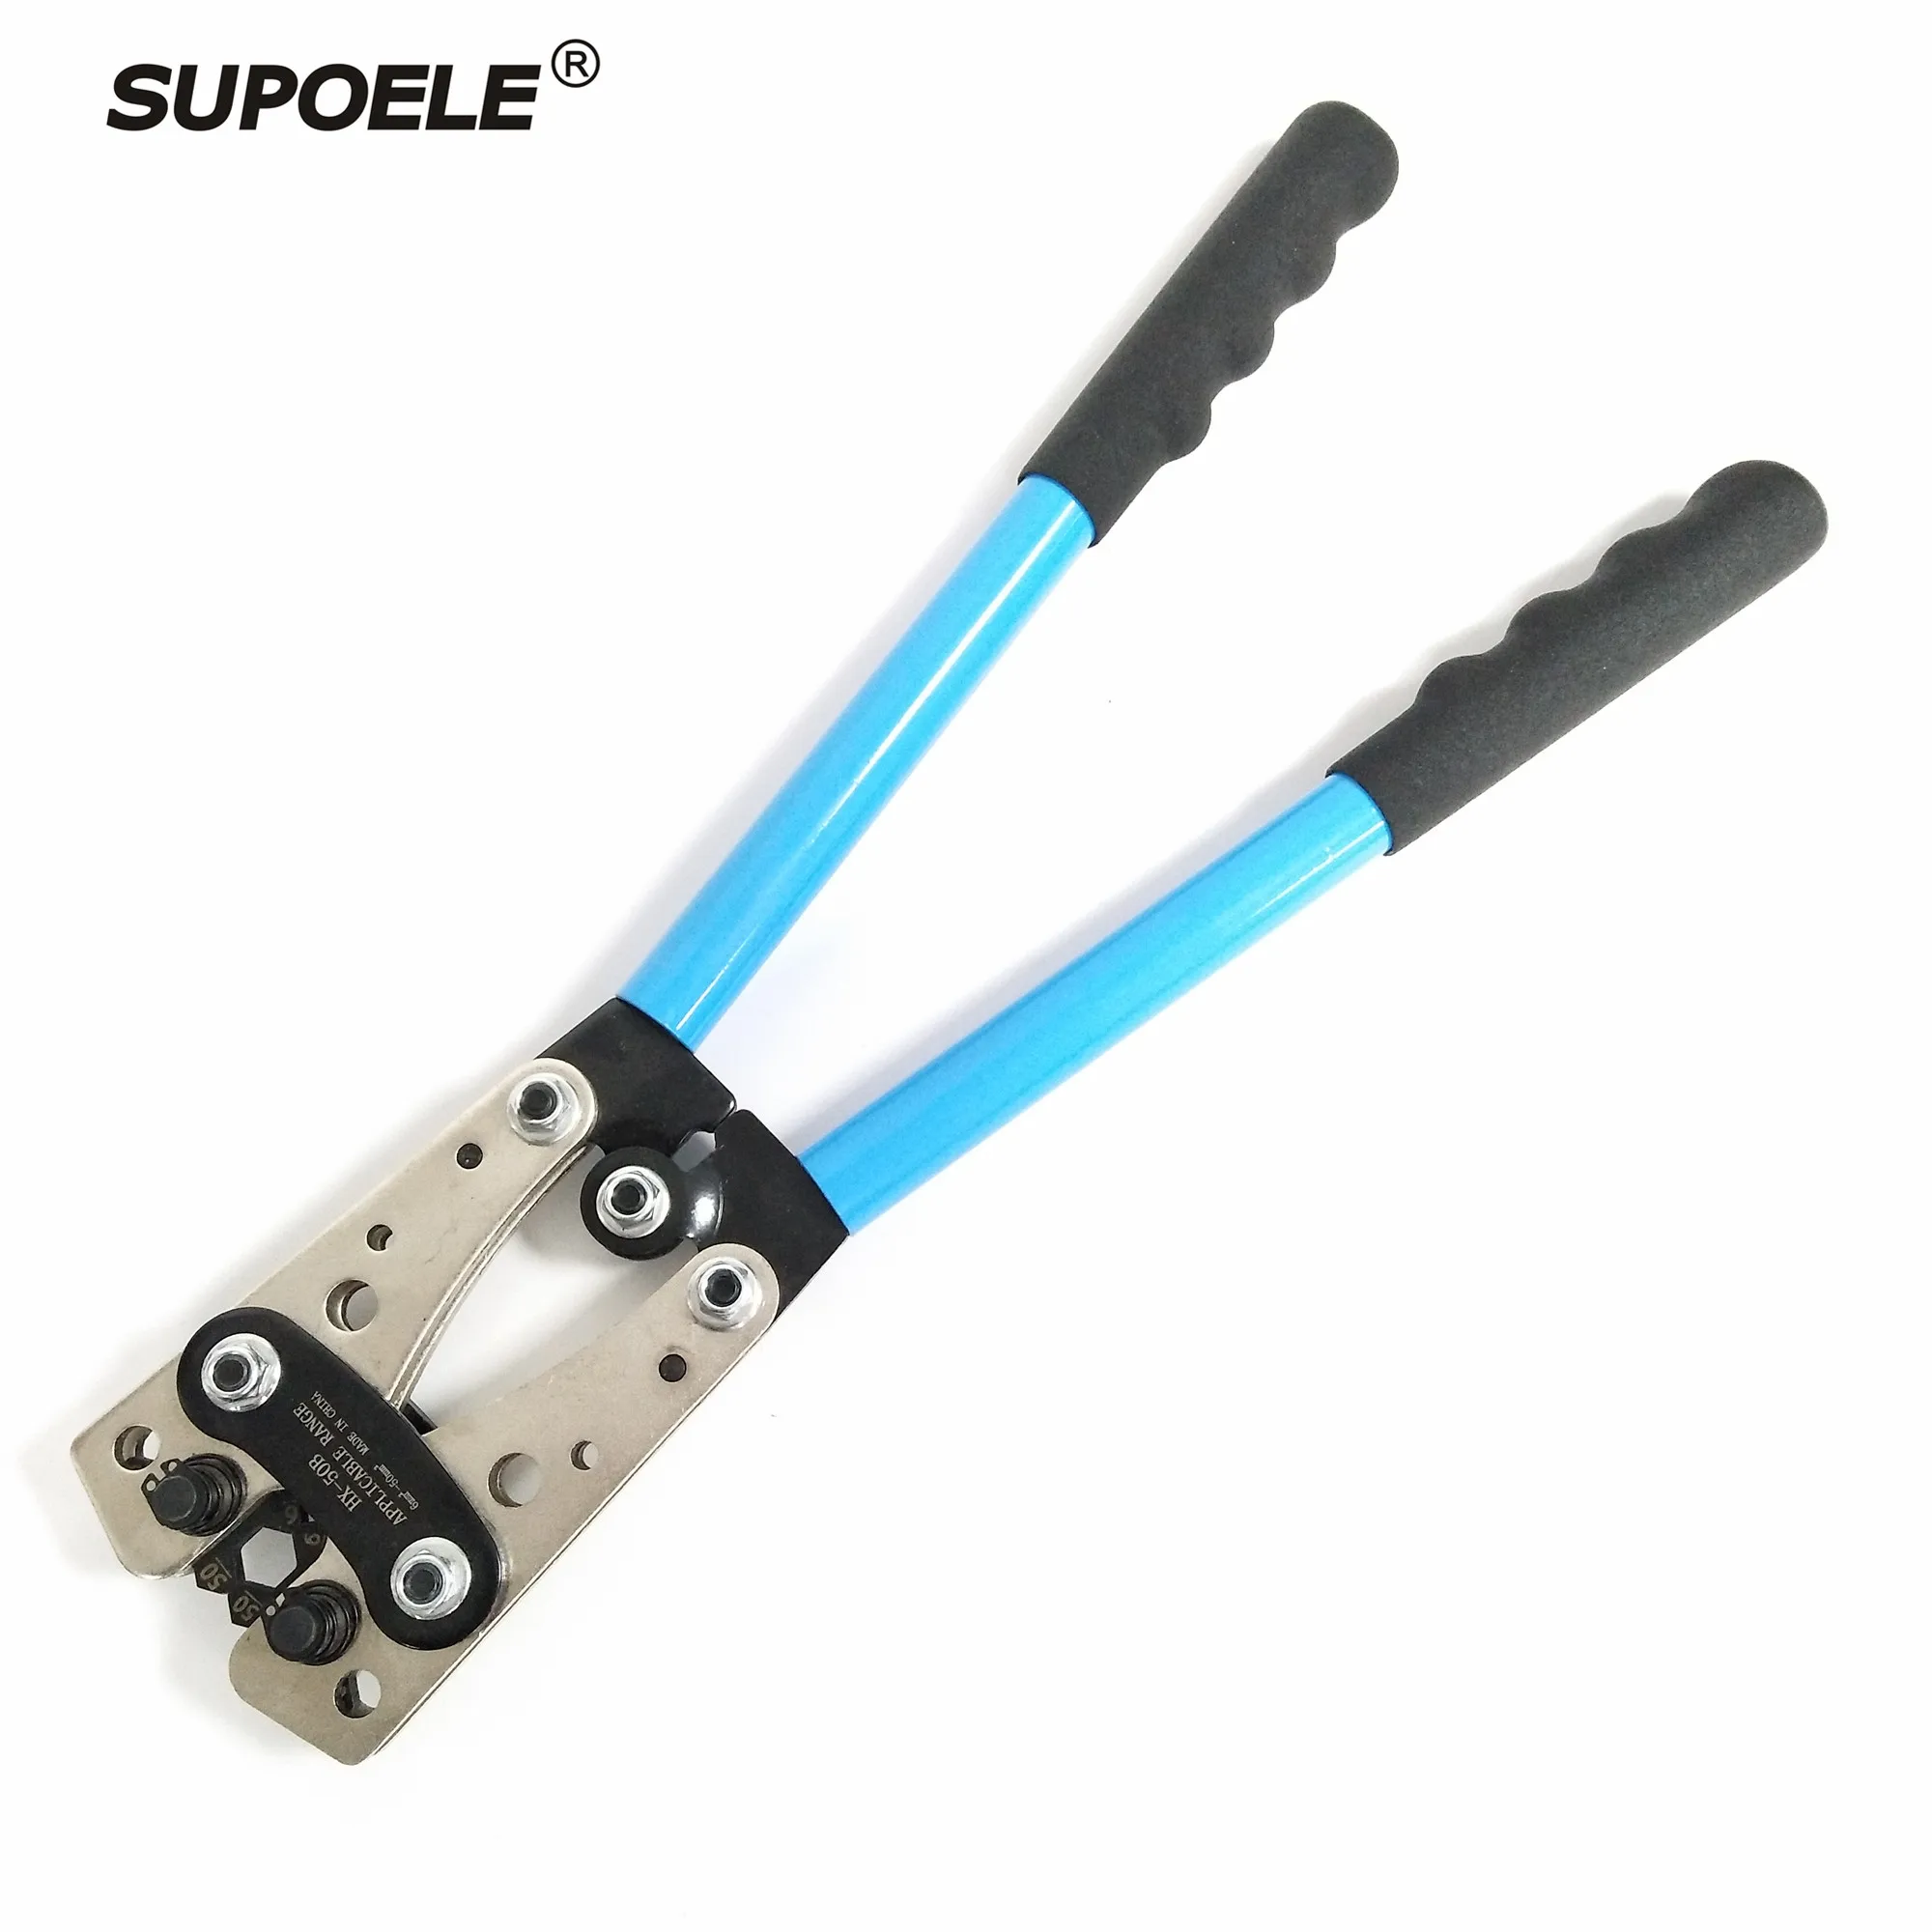 6-50mm² Cable Lug Crimper Cu/Al Terminal Plier Large Wire Terminal Crimping Tool 